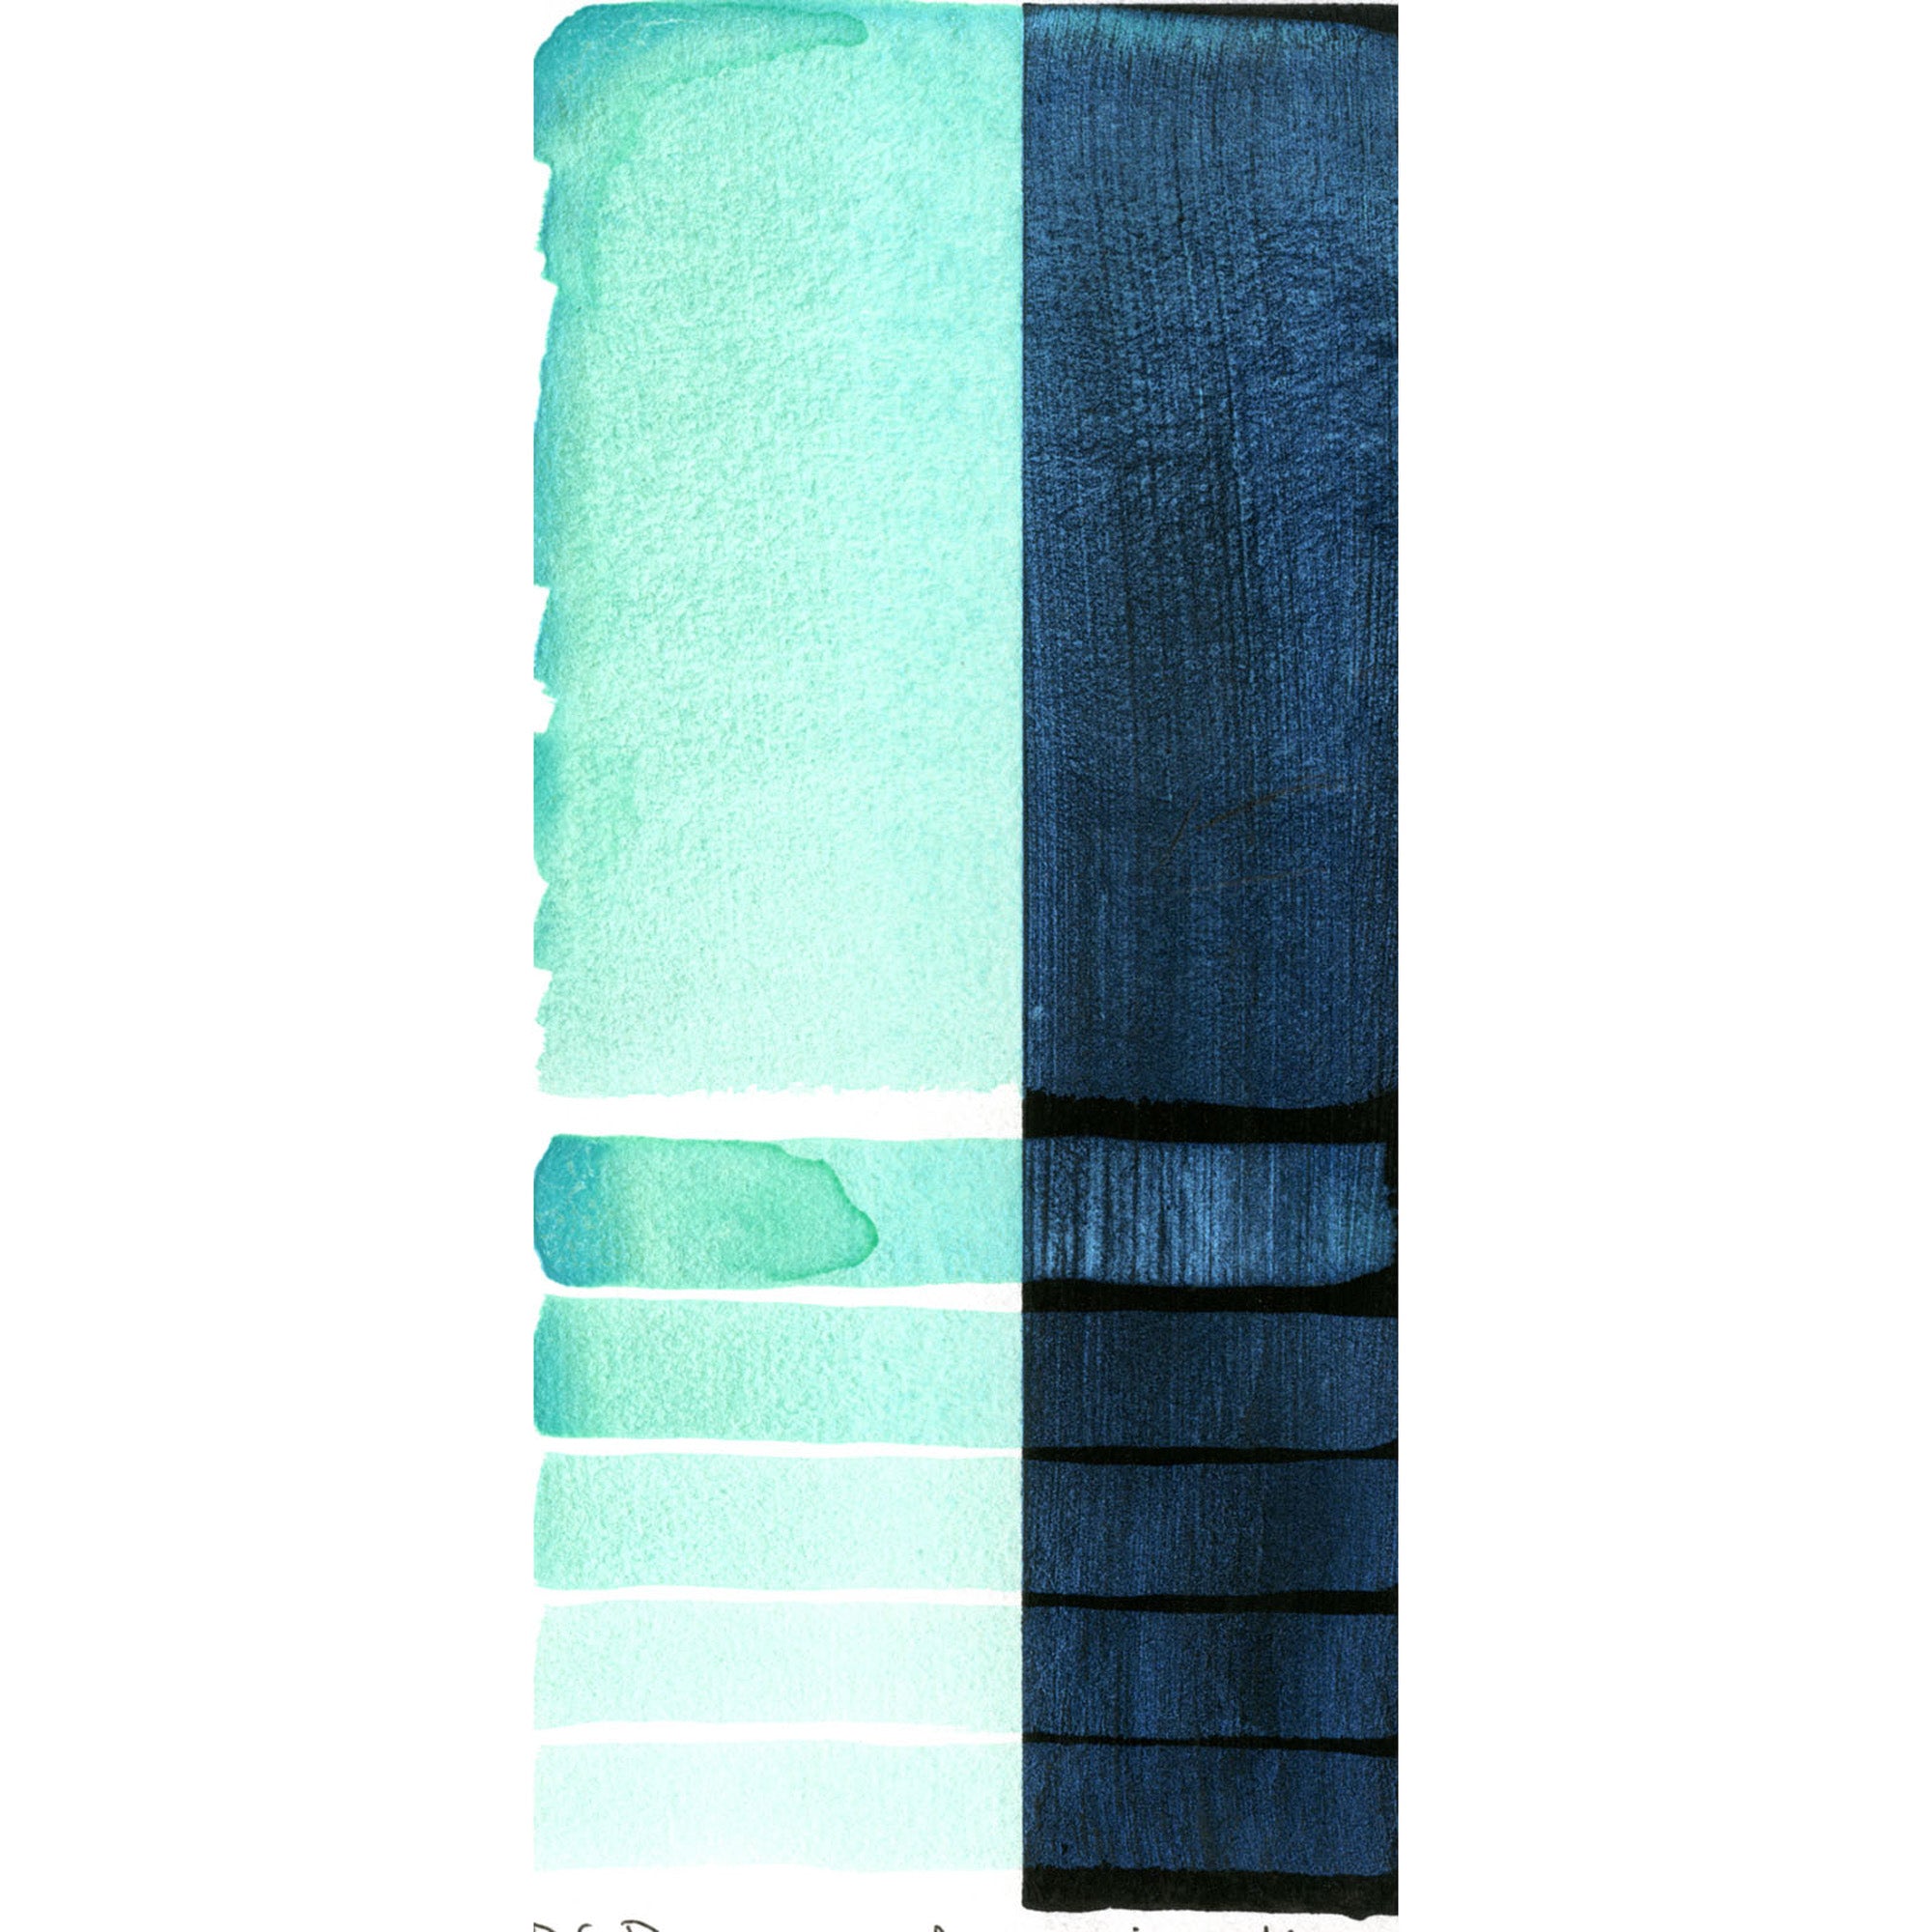 Daniel Smith Watercolor 15ml Duochrome Aquamarine 1